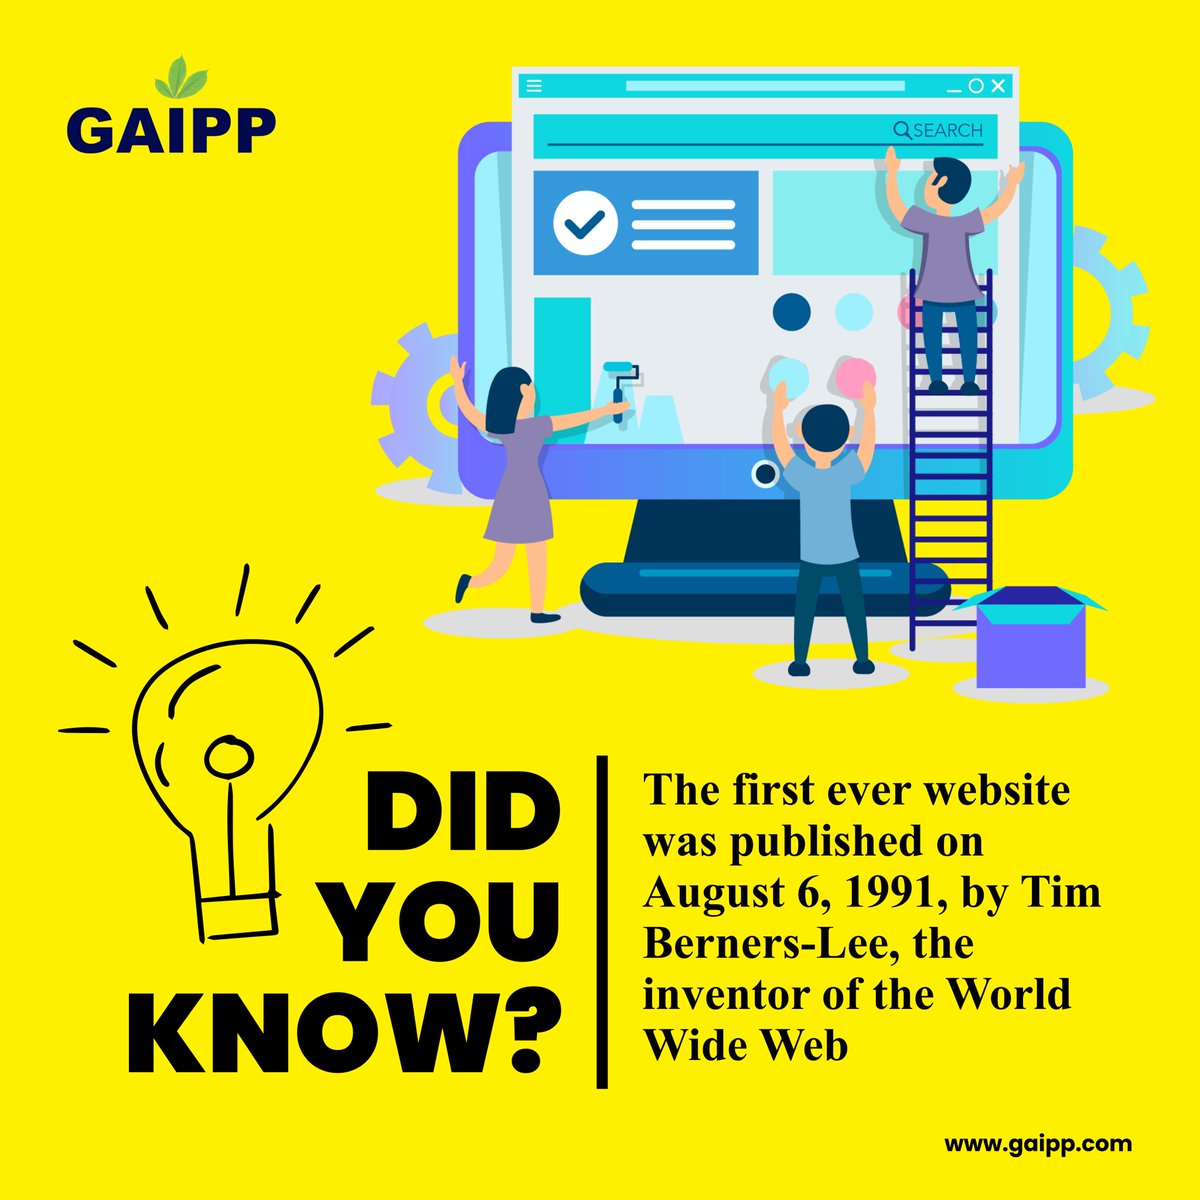 #gaipp #WorldWideWeb #FirstWebsite #TimBernersLee #InternetHistory #WebPioneer #TechnologyMilestone #DigitalRevolution #InternetInnovation #InformationAge #TechHistory